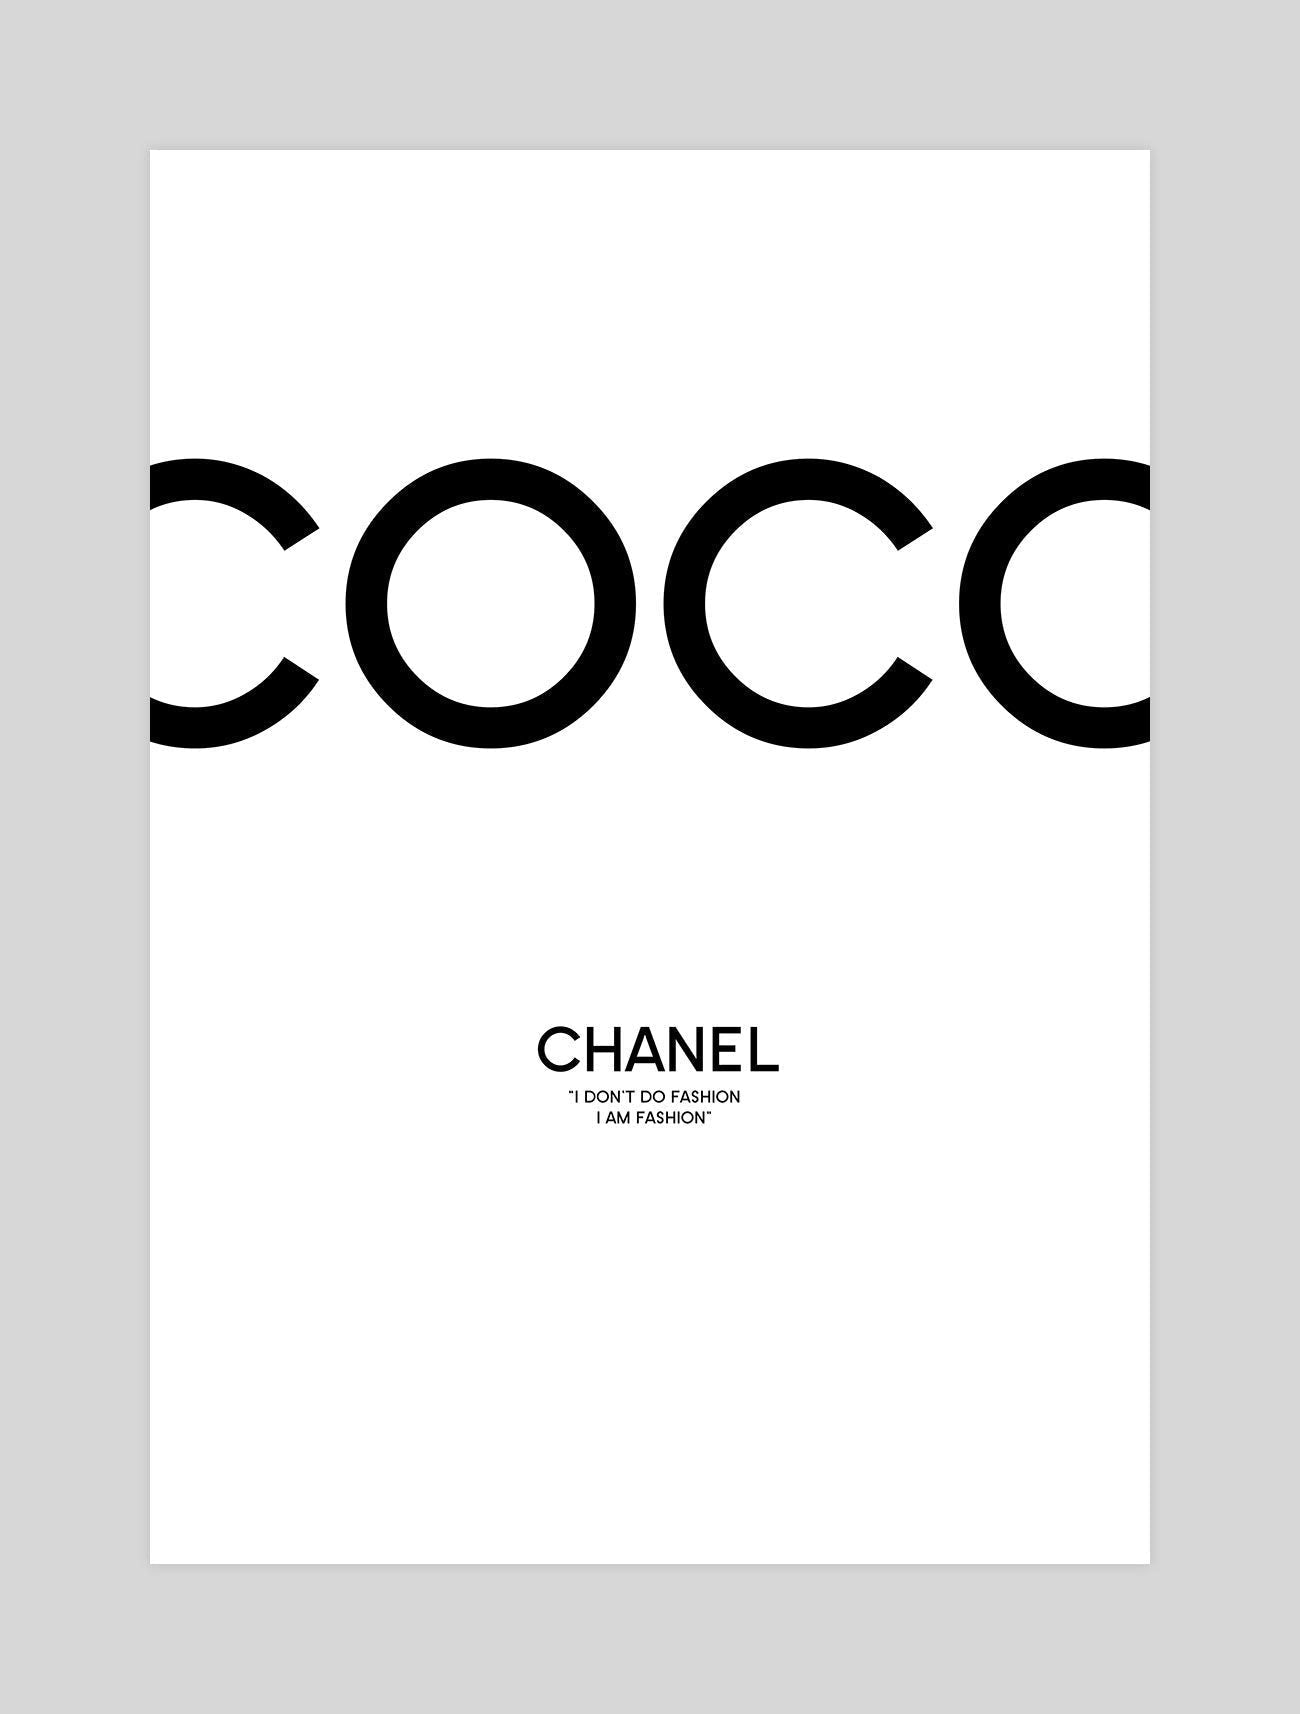 Coco Chanel framed art Quote, Chanel Art Print, Black and White Coco Chanel  Decor, Girls Room Decor, Fashion Wall Art Print - Wall Art Decor, Framed  Painting, Home Decor - Arteebo